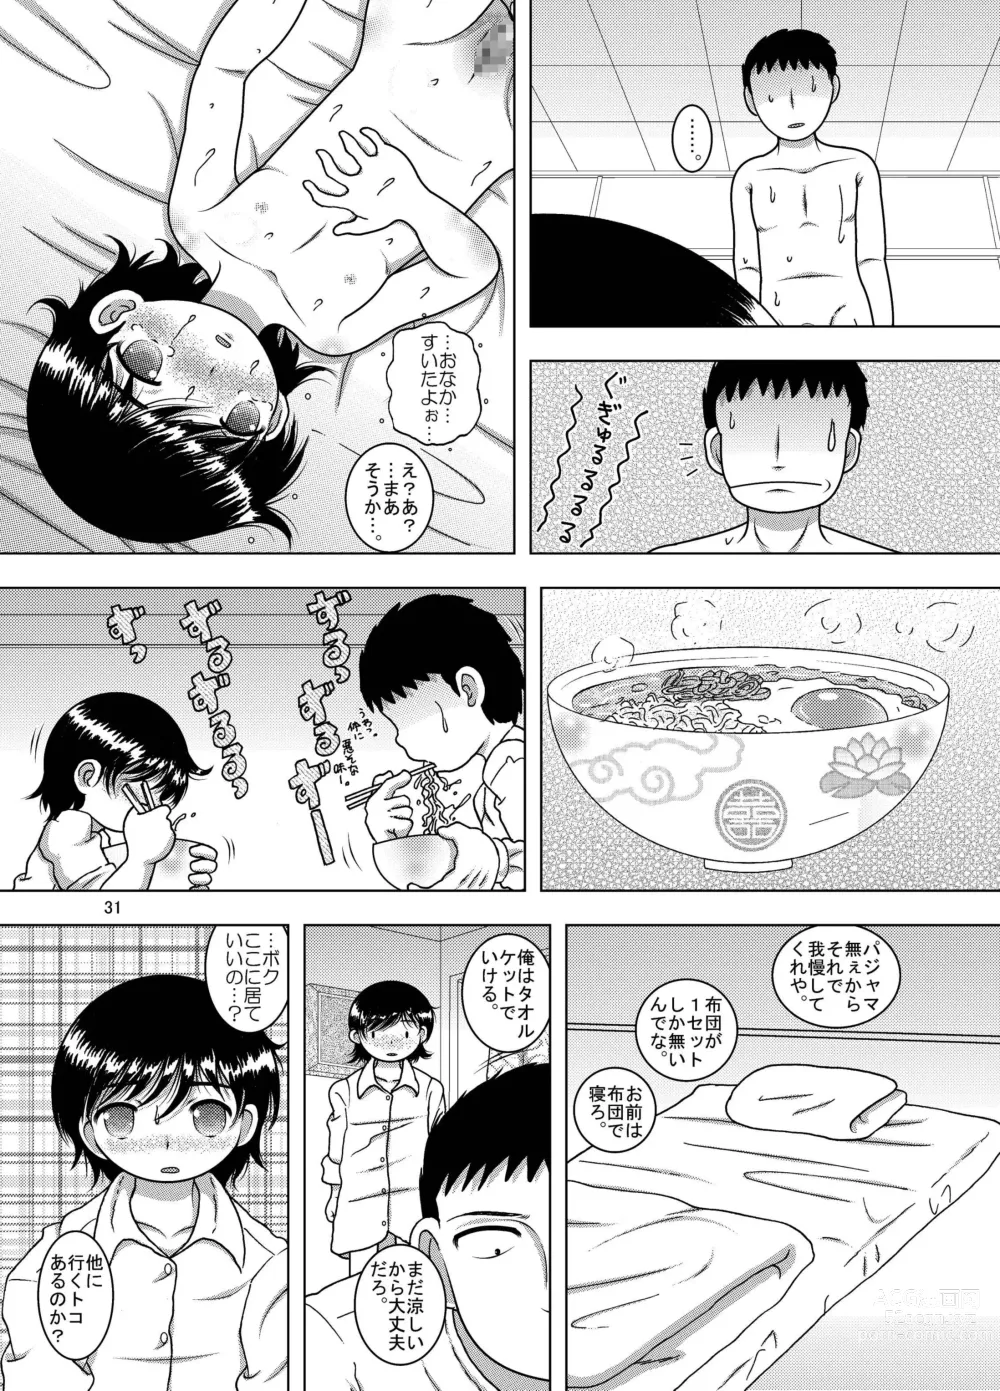 Page 31 of doujinshi Hoko Kankan